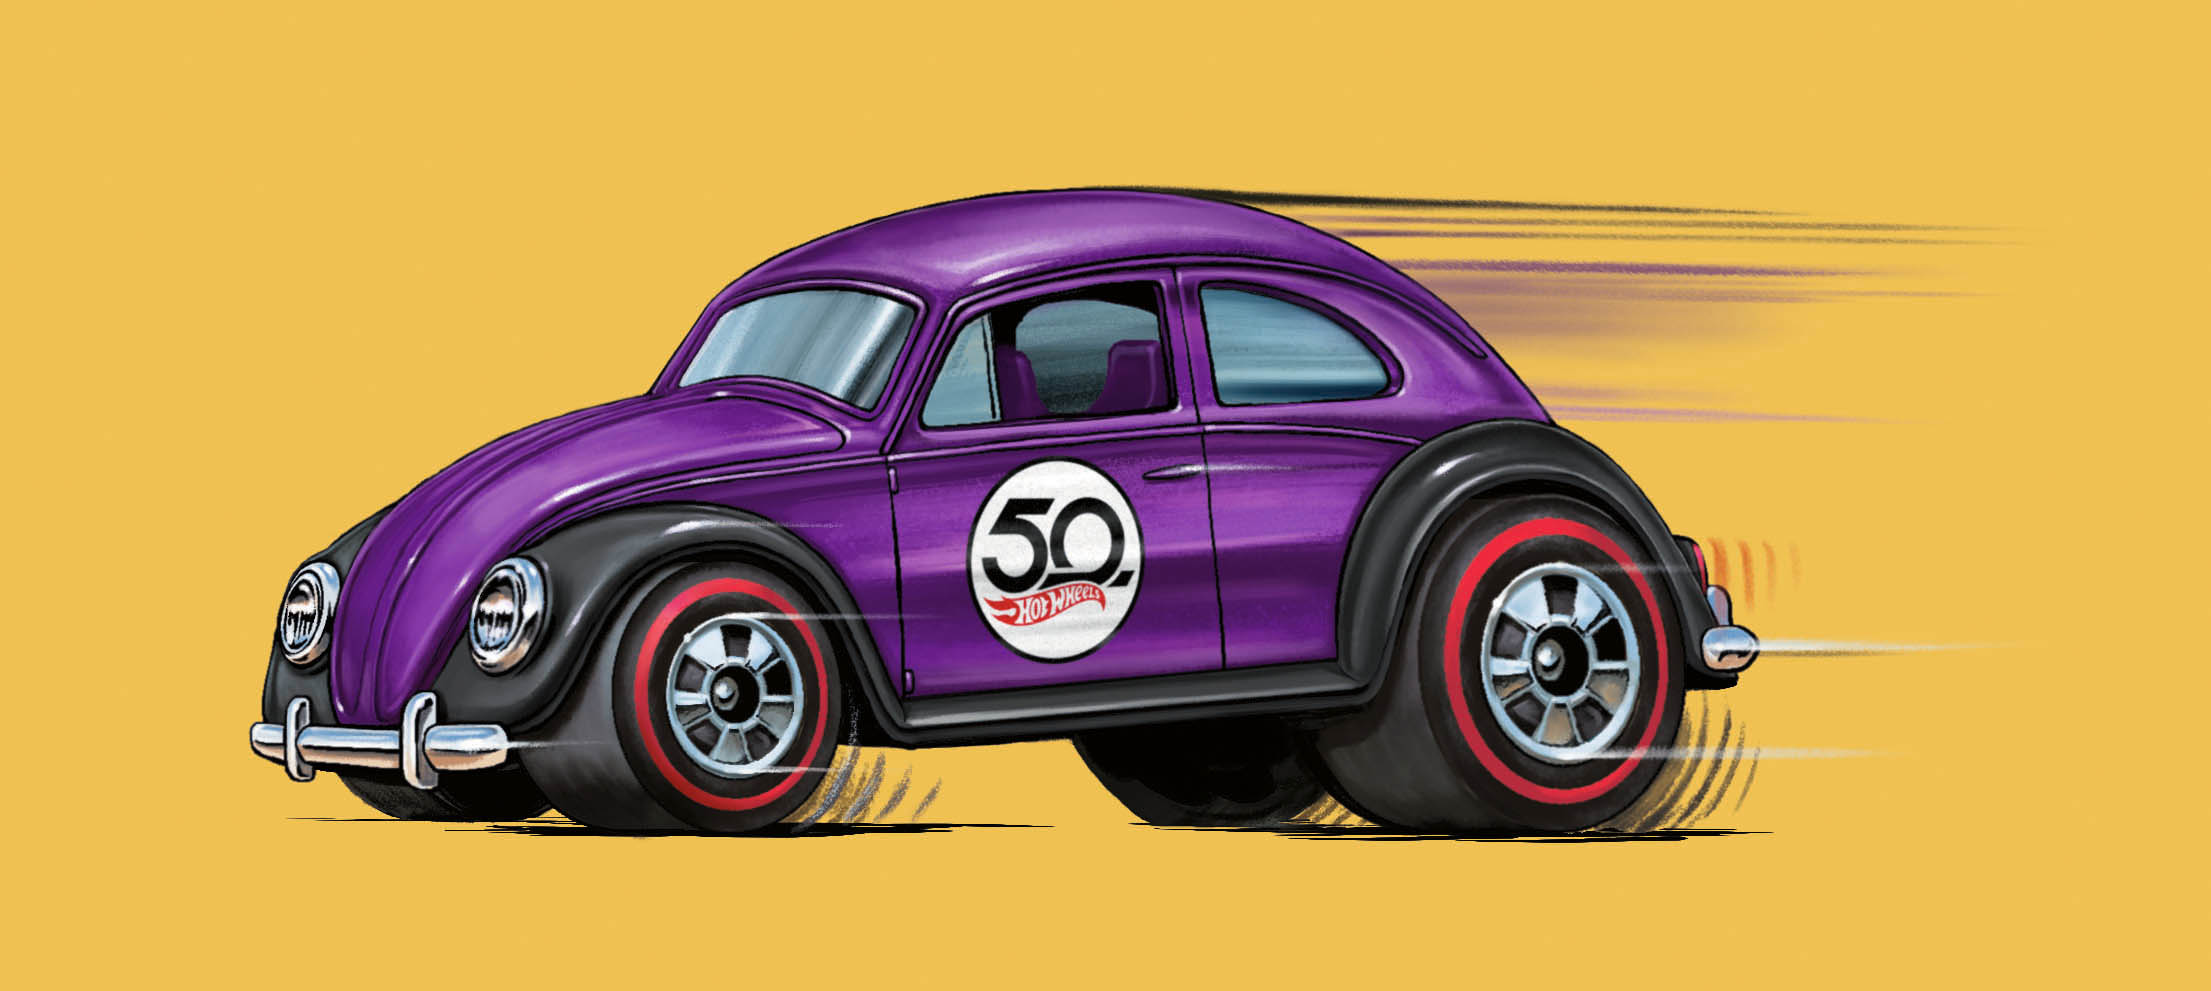 Ray Goudey Illustration volkswagon bug car